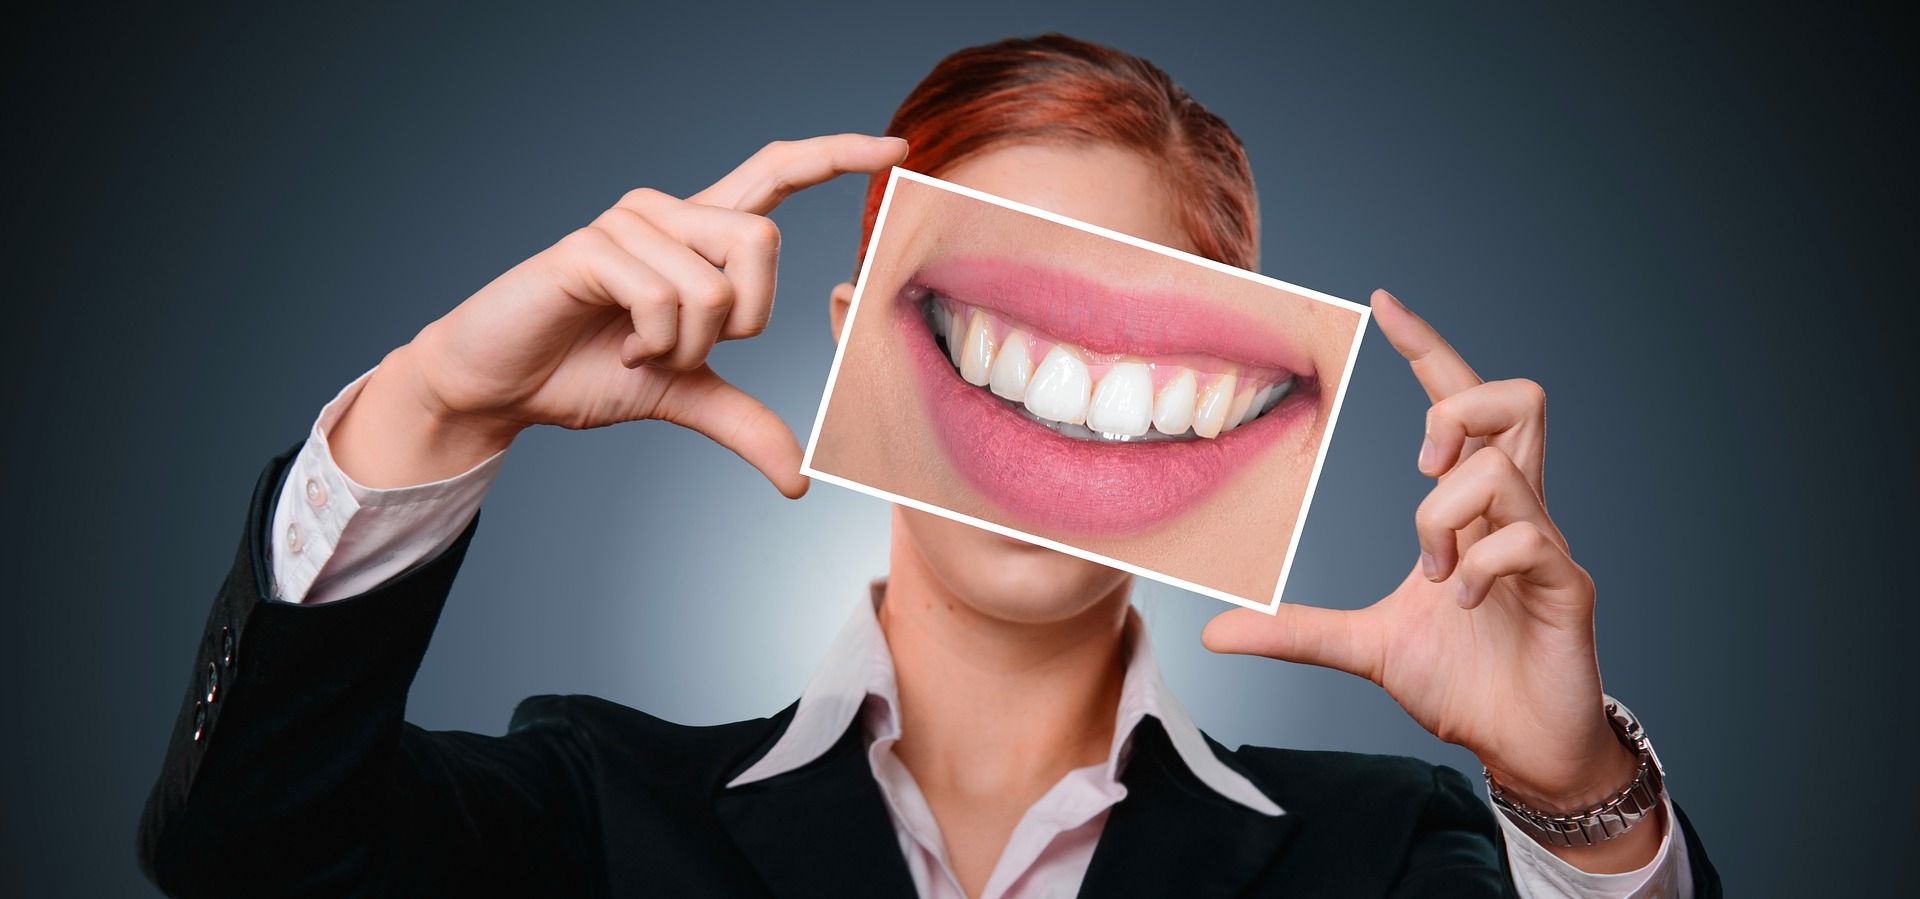 Consejos para cuidar la prótesis dental (Pixabay)